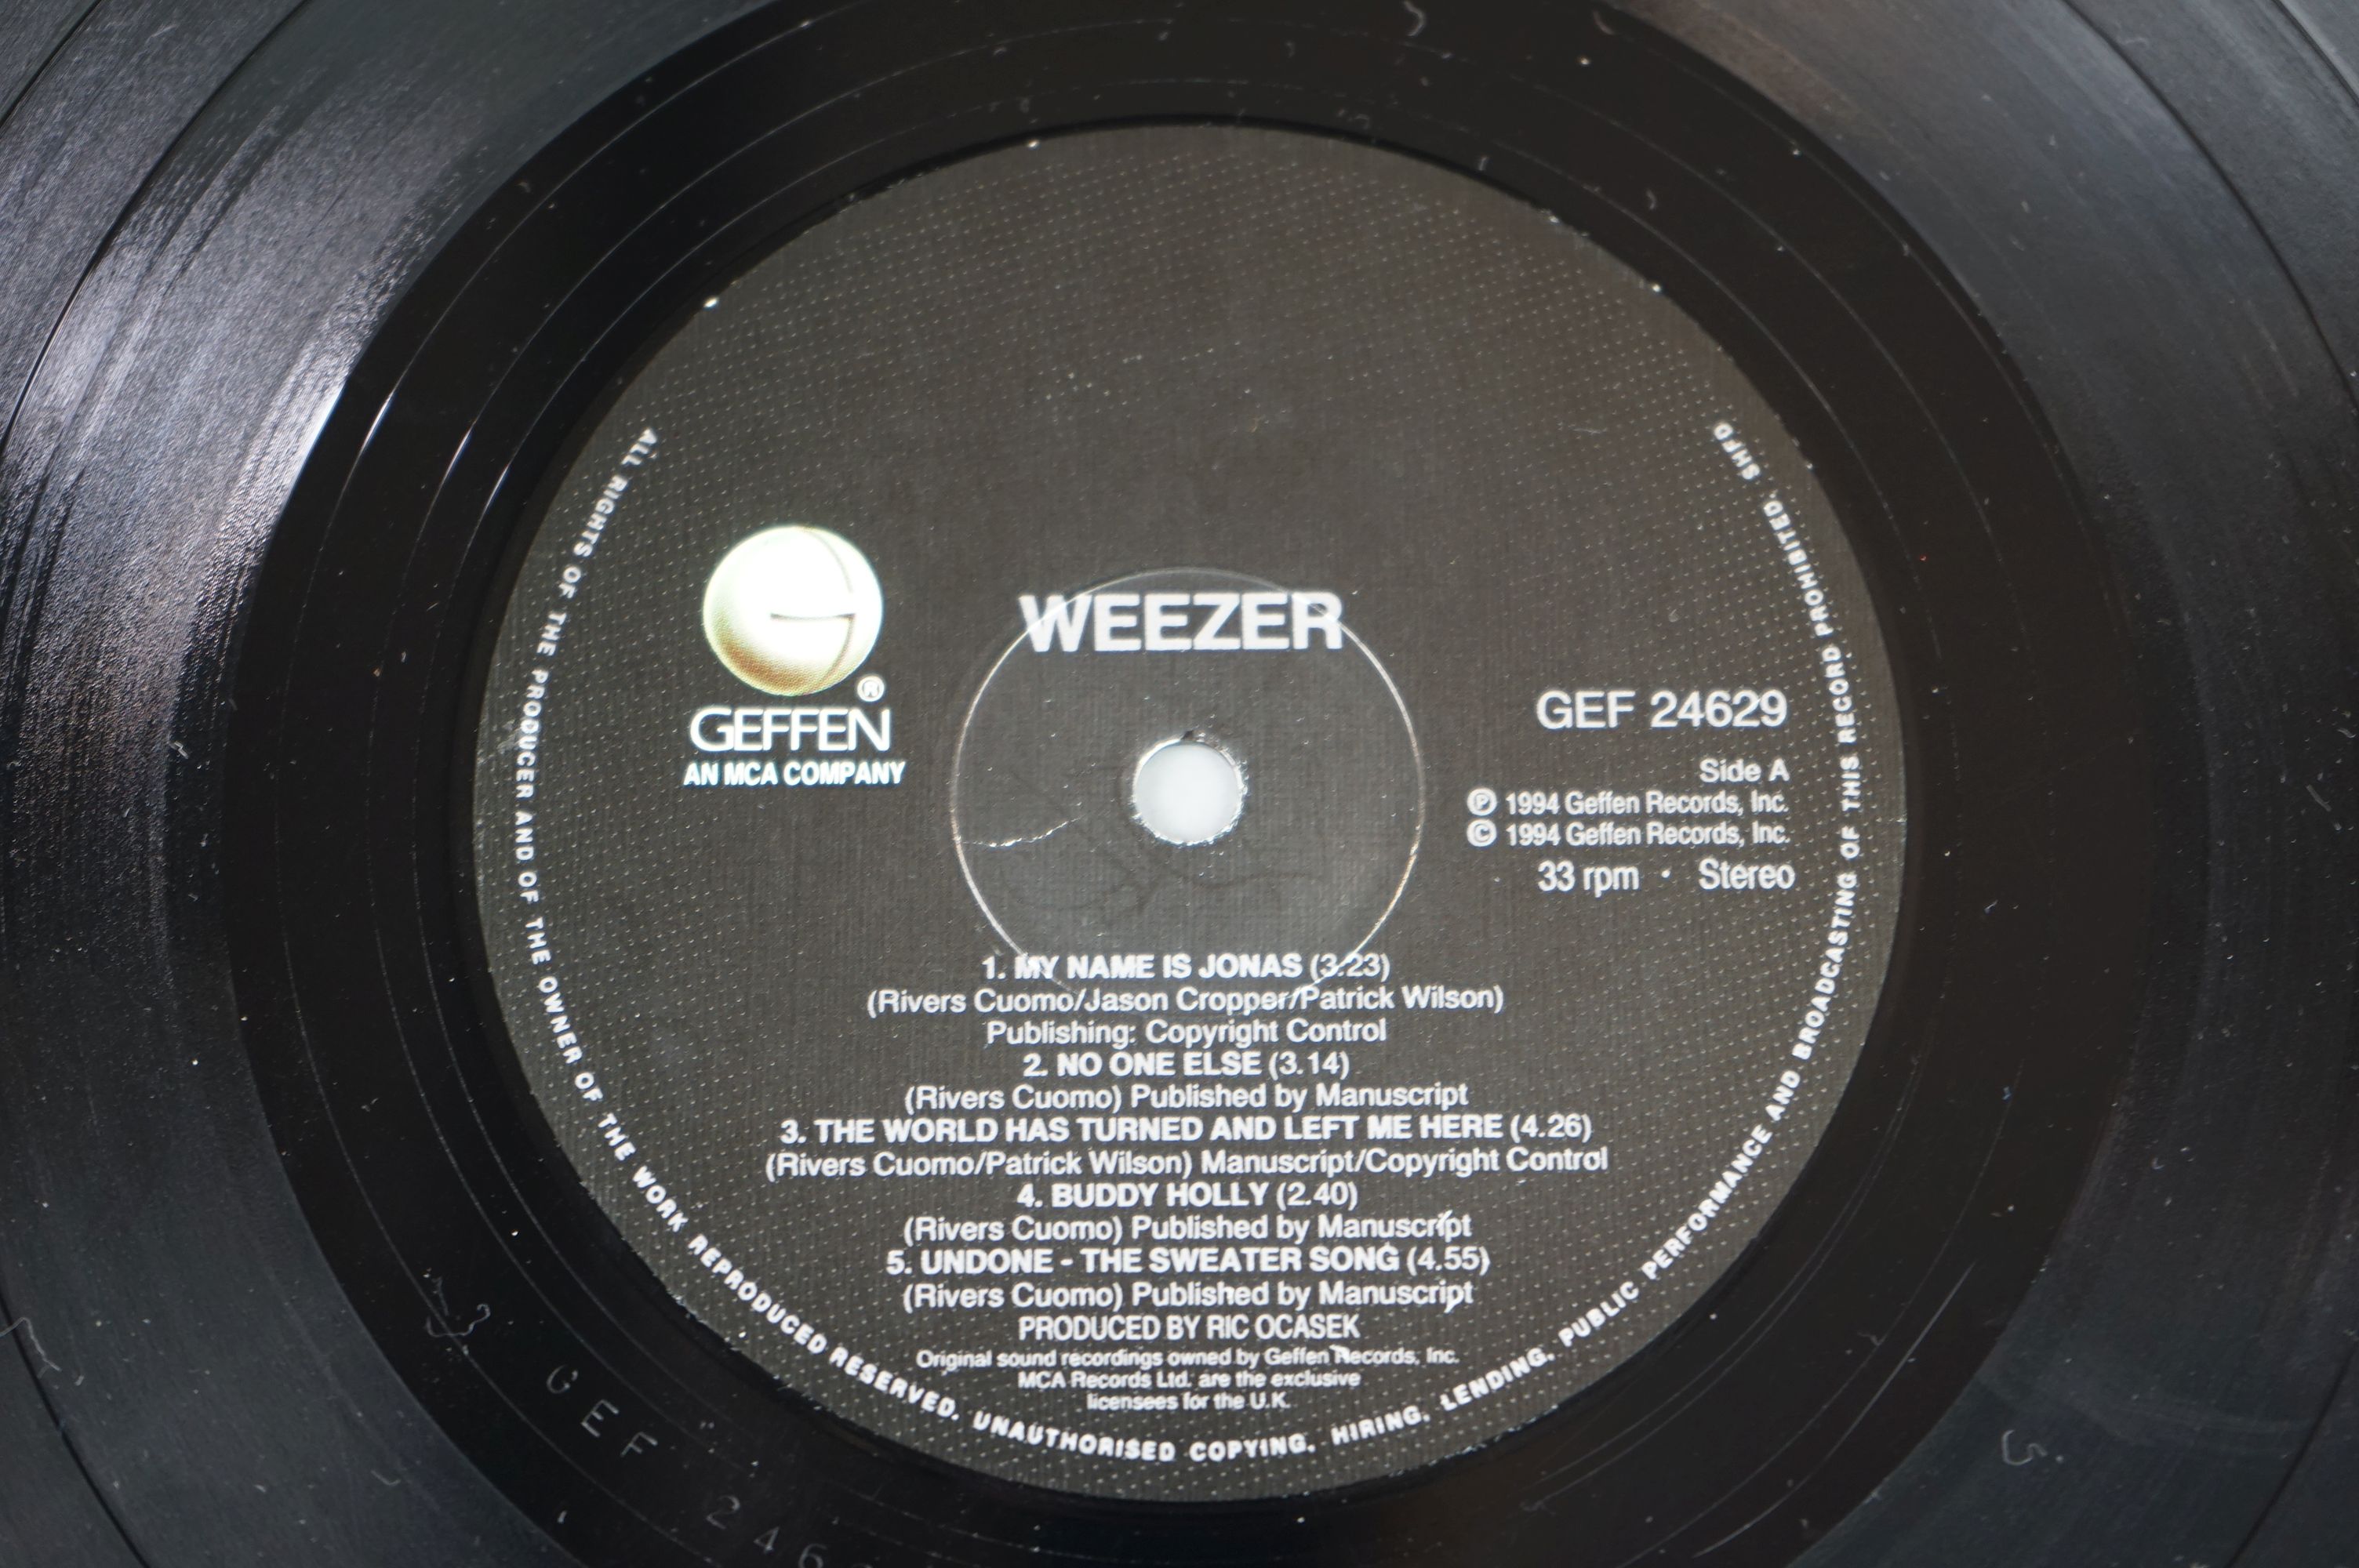 Vinyl - Weezer self titled LP special pressing Time Bomb on Geffen GEF24629, vg++ - Image 3 of 5